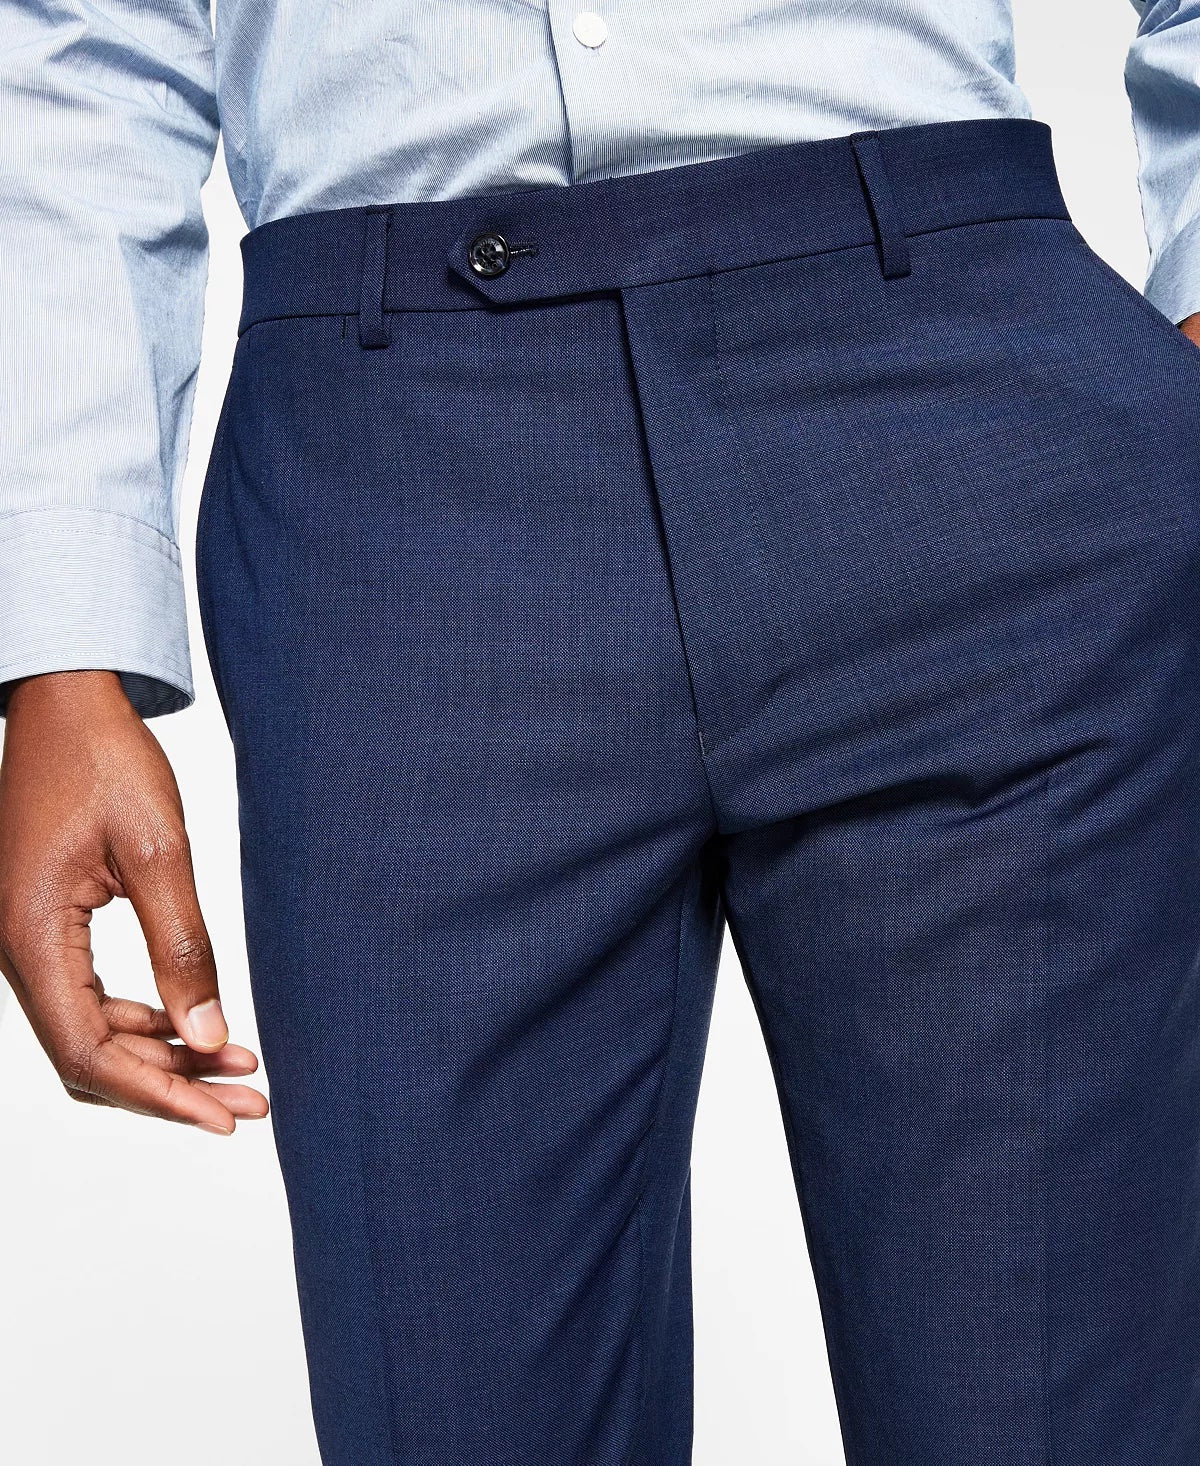 Tommy Hilfiger Mens Modern Fit TH Flex Suit Dress Pants Blue 42 x 30 Sharkskin